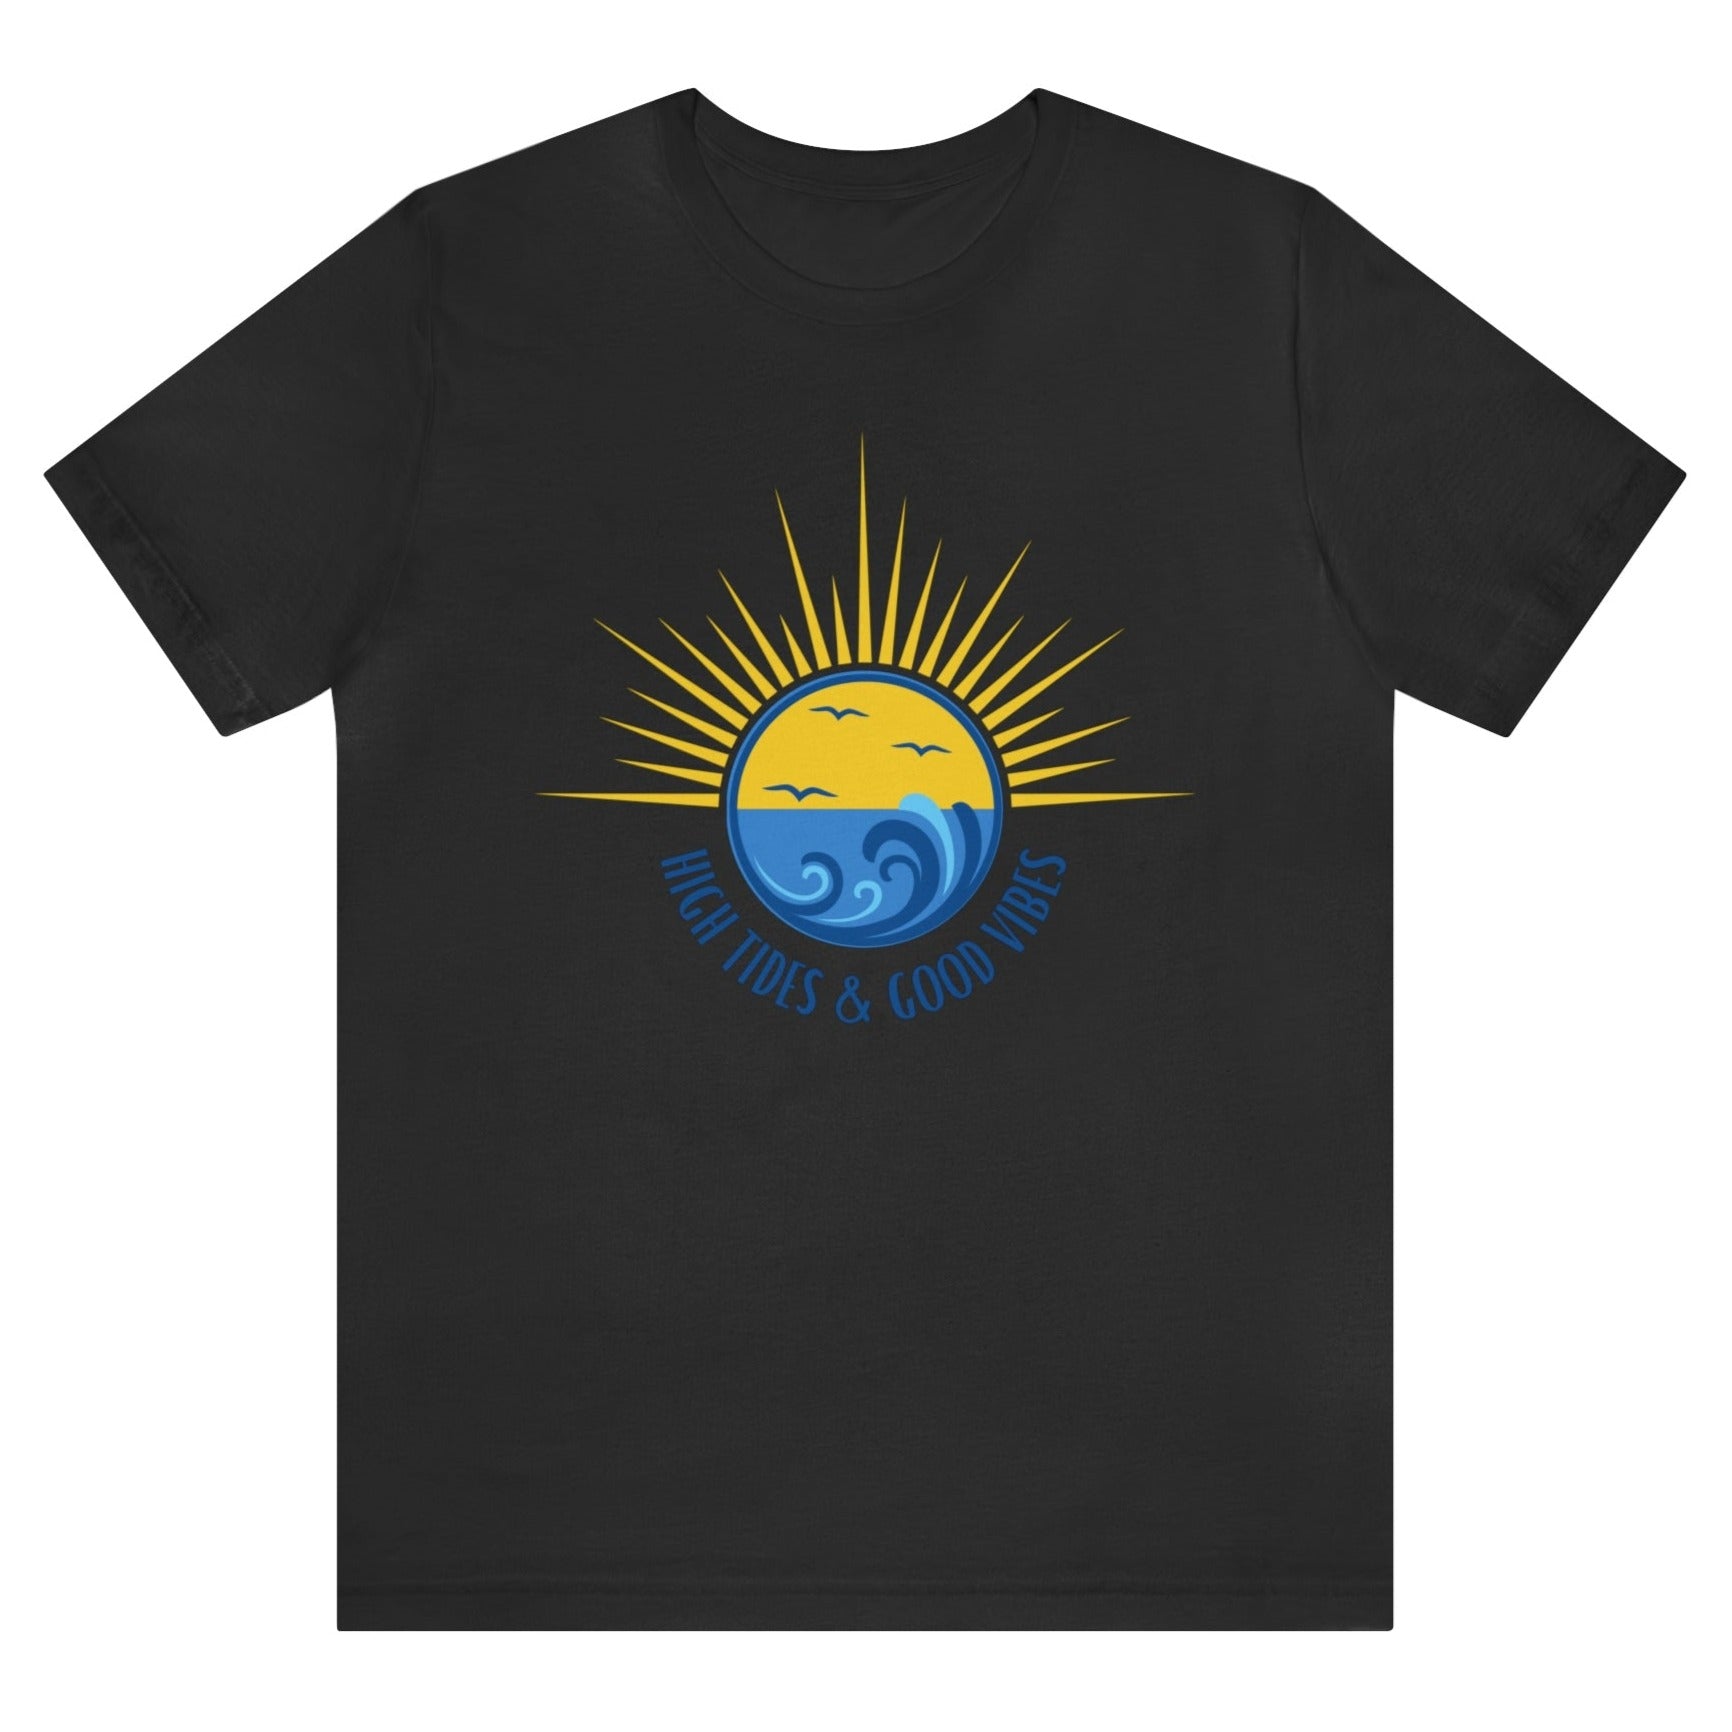 high-tides-and-good-vibes-black-t-shirt-beach-sunset-unisex